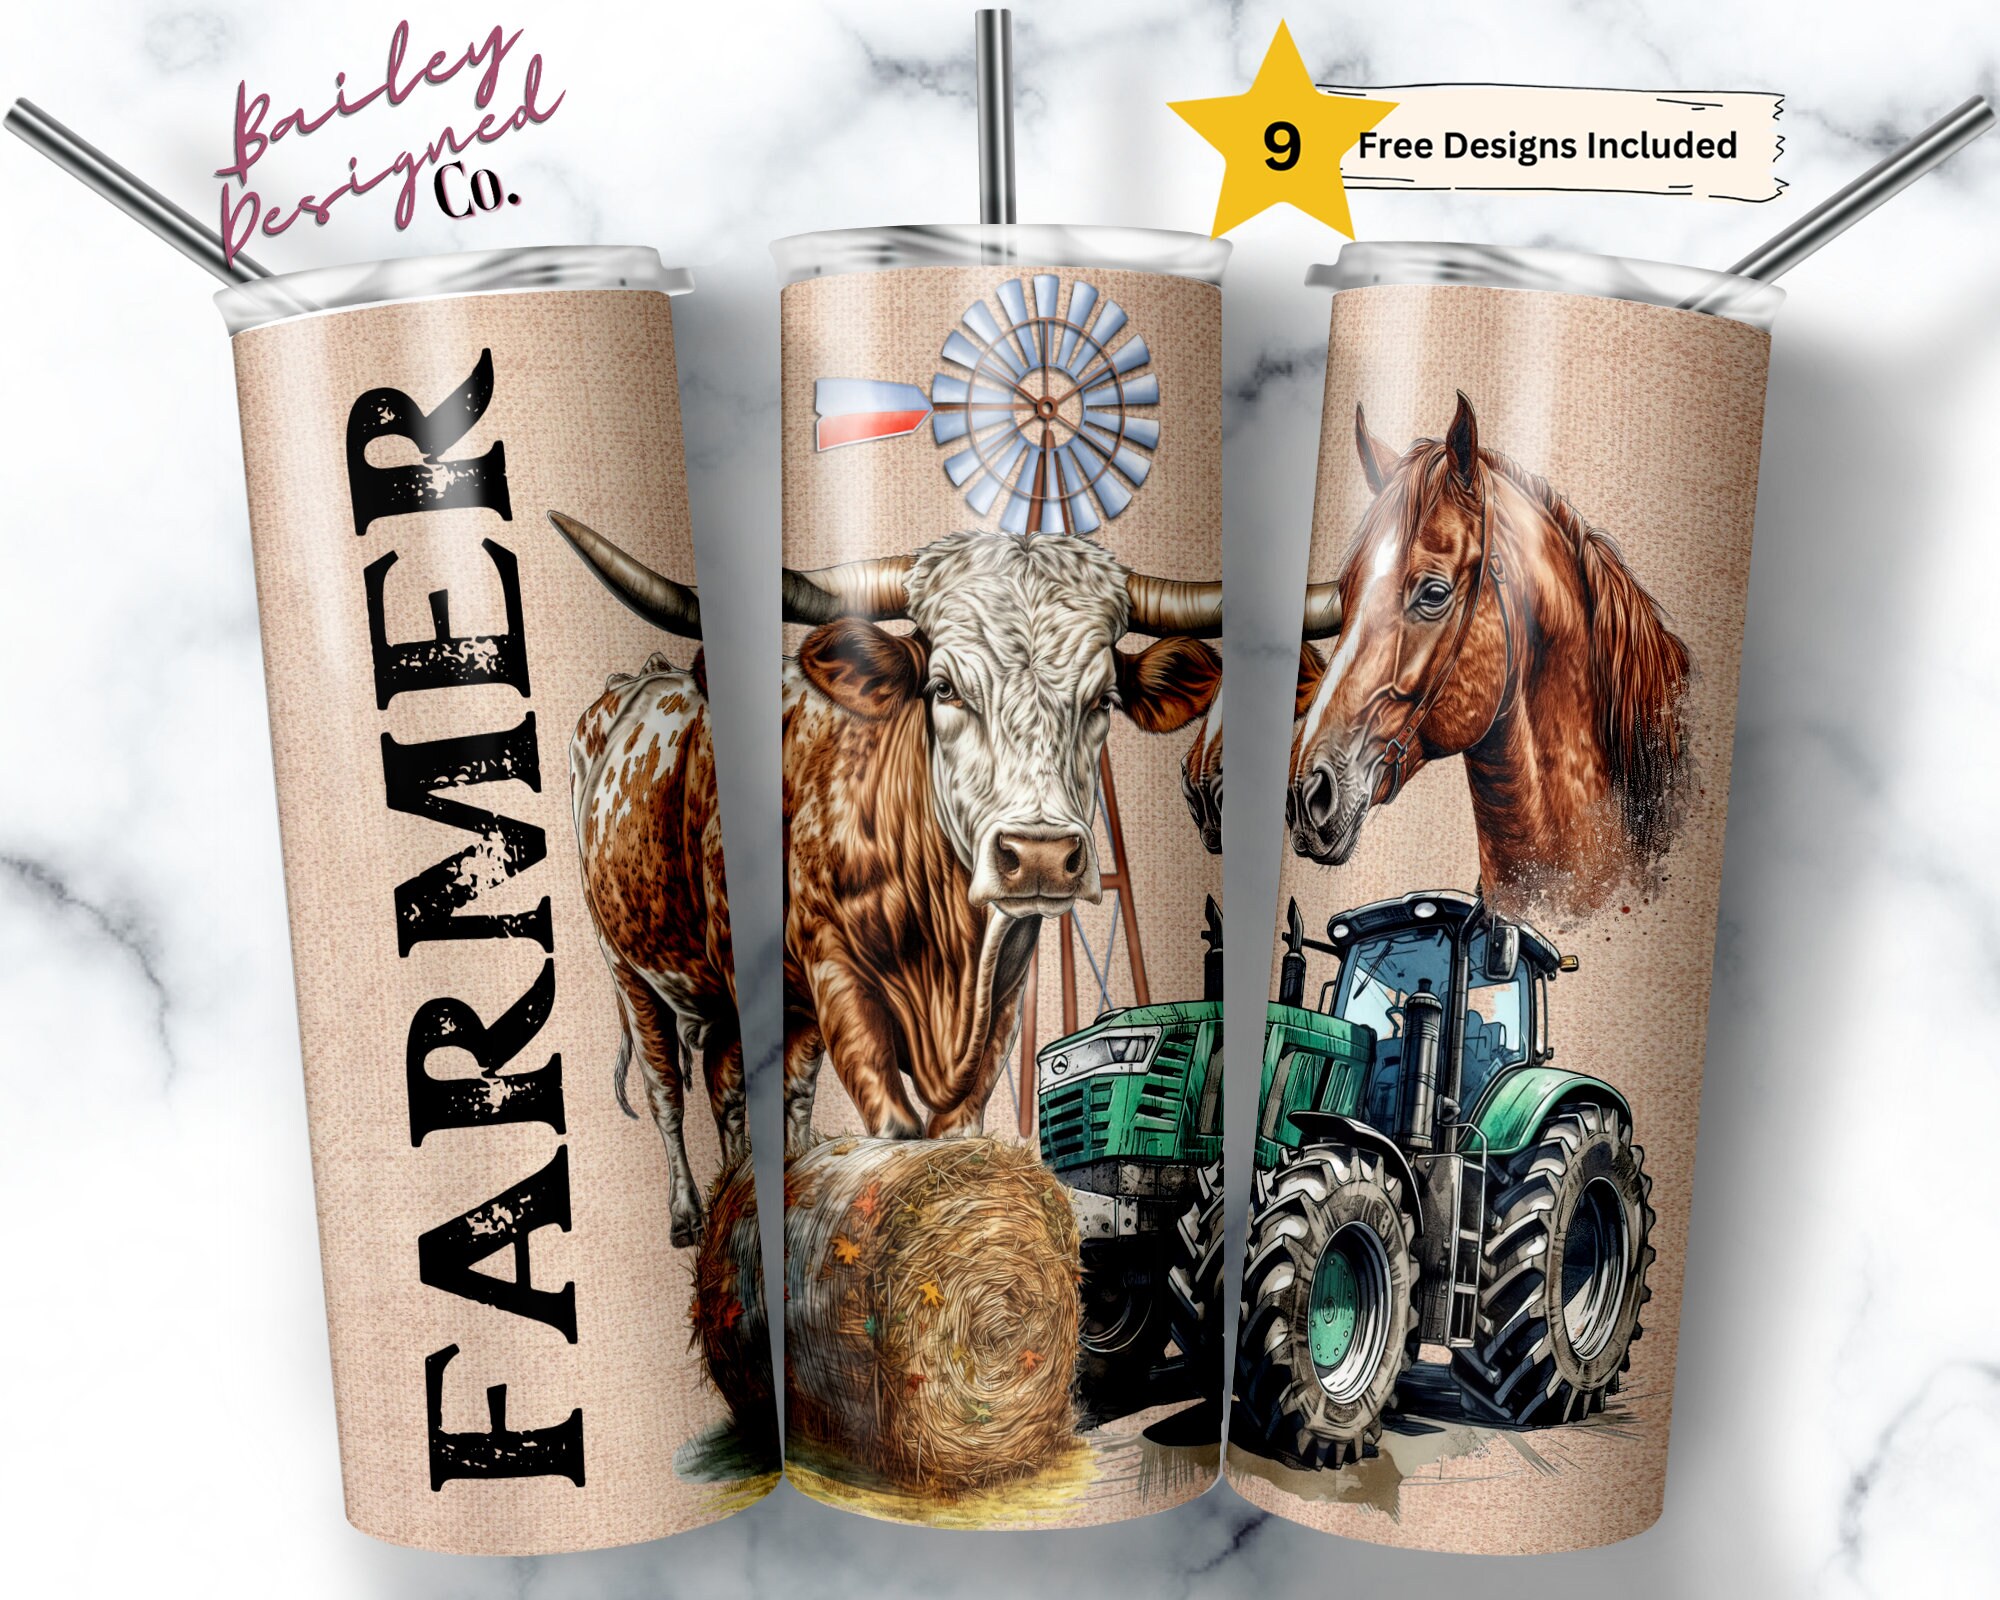 Set of 4 Farm Fresh Cooler Tumblers with Color Lids & Straws, 16oz